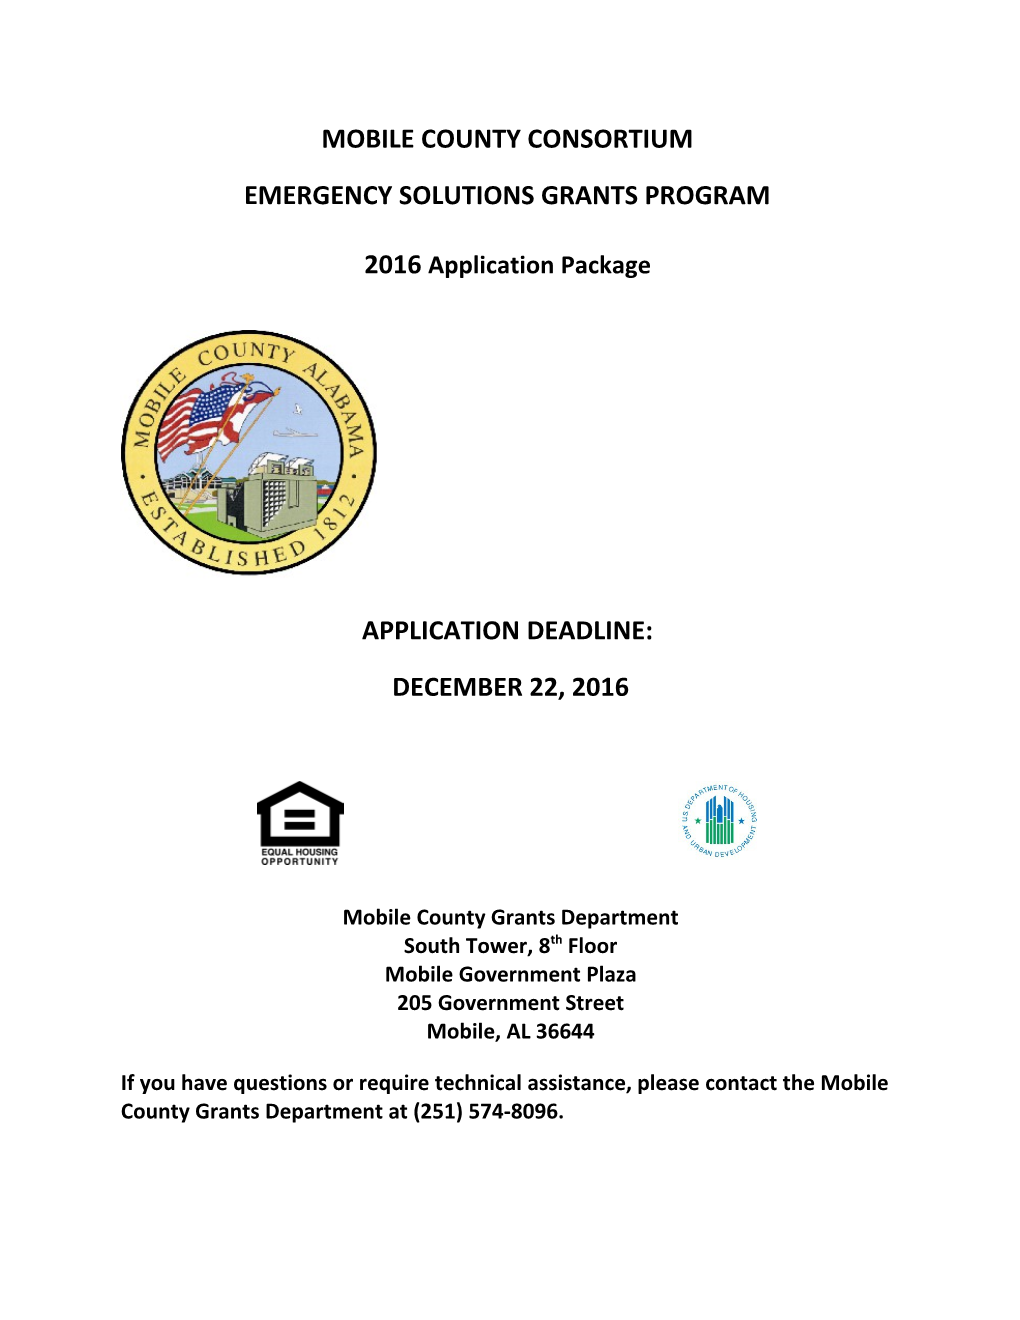 Emergency Solutions Grants Program